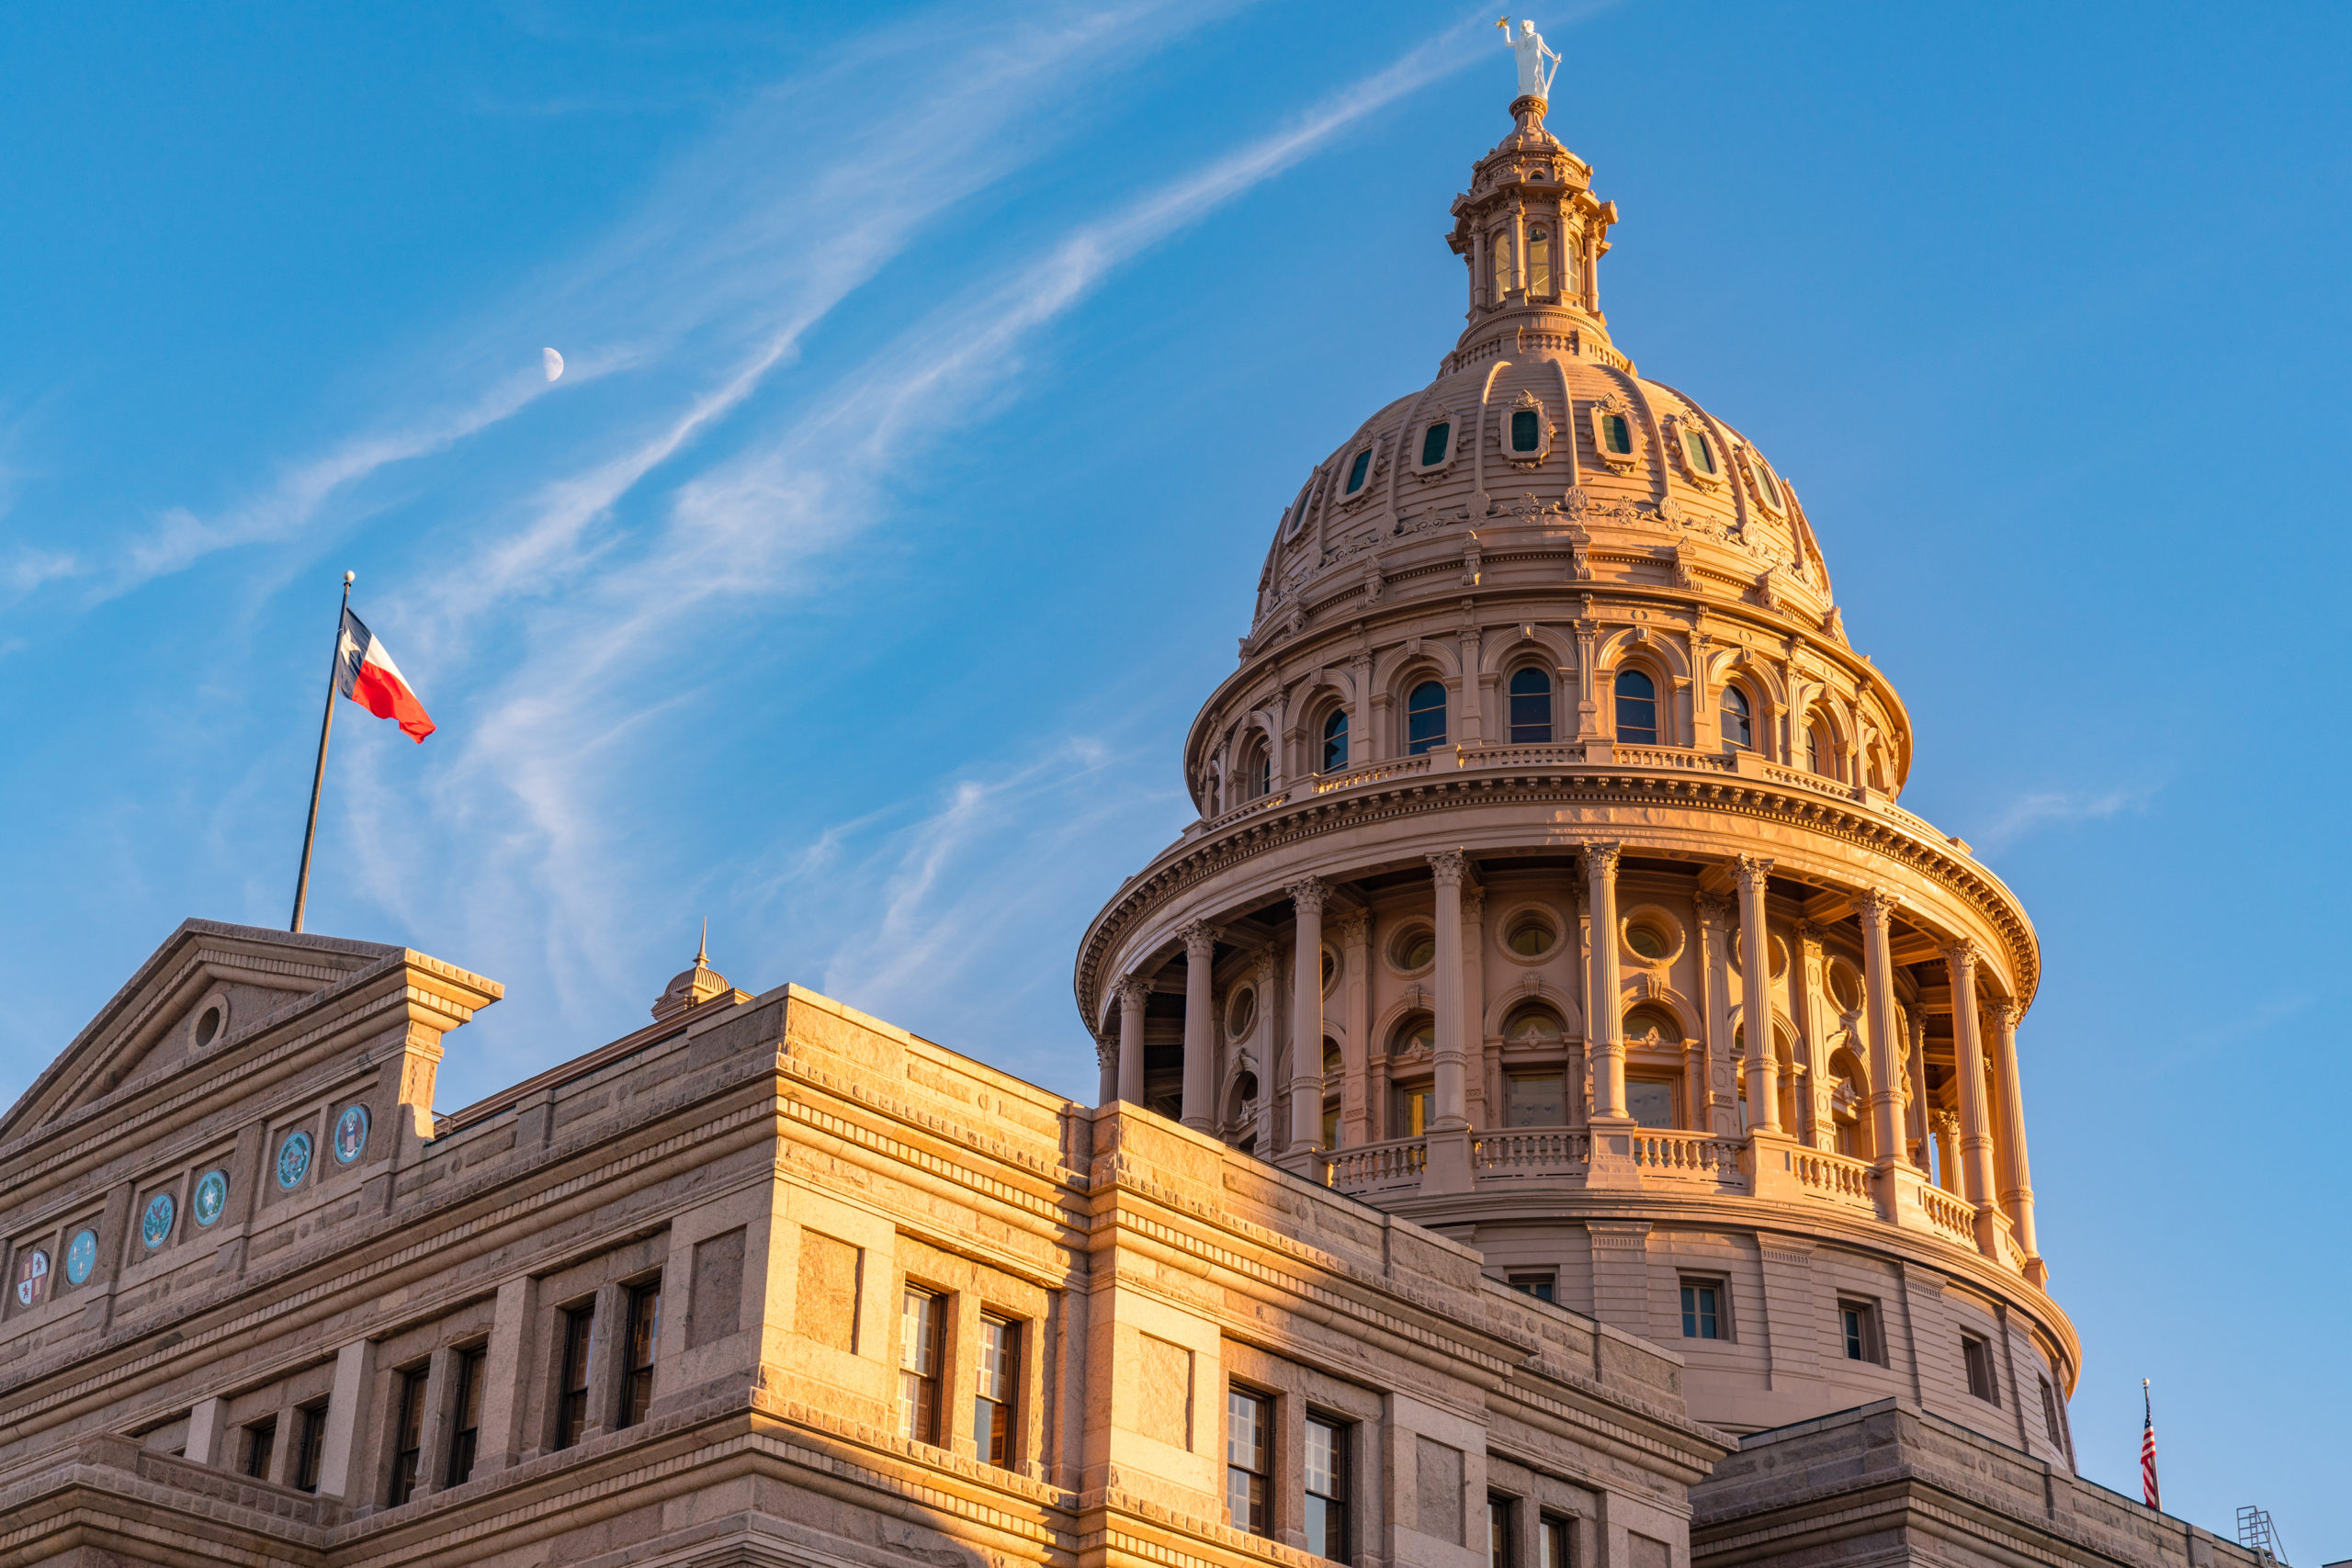 How Did Child Protection Fare in the 86th Texas Legislature?